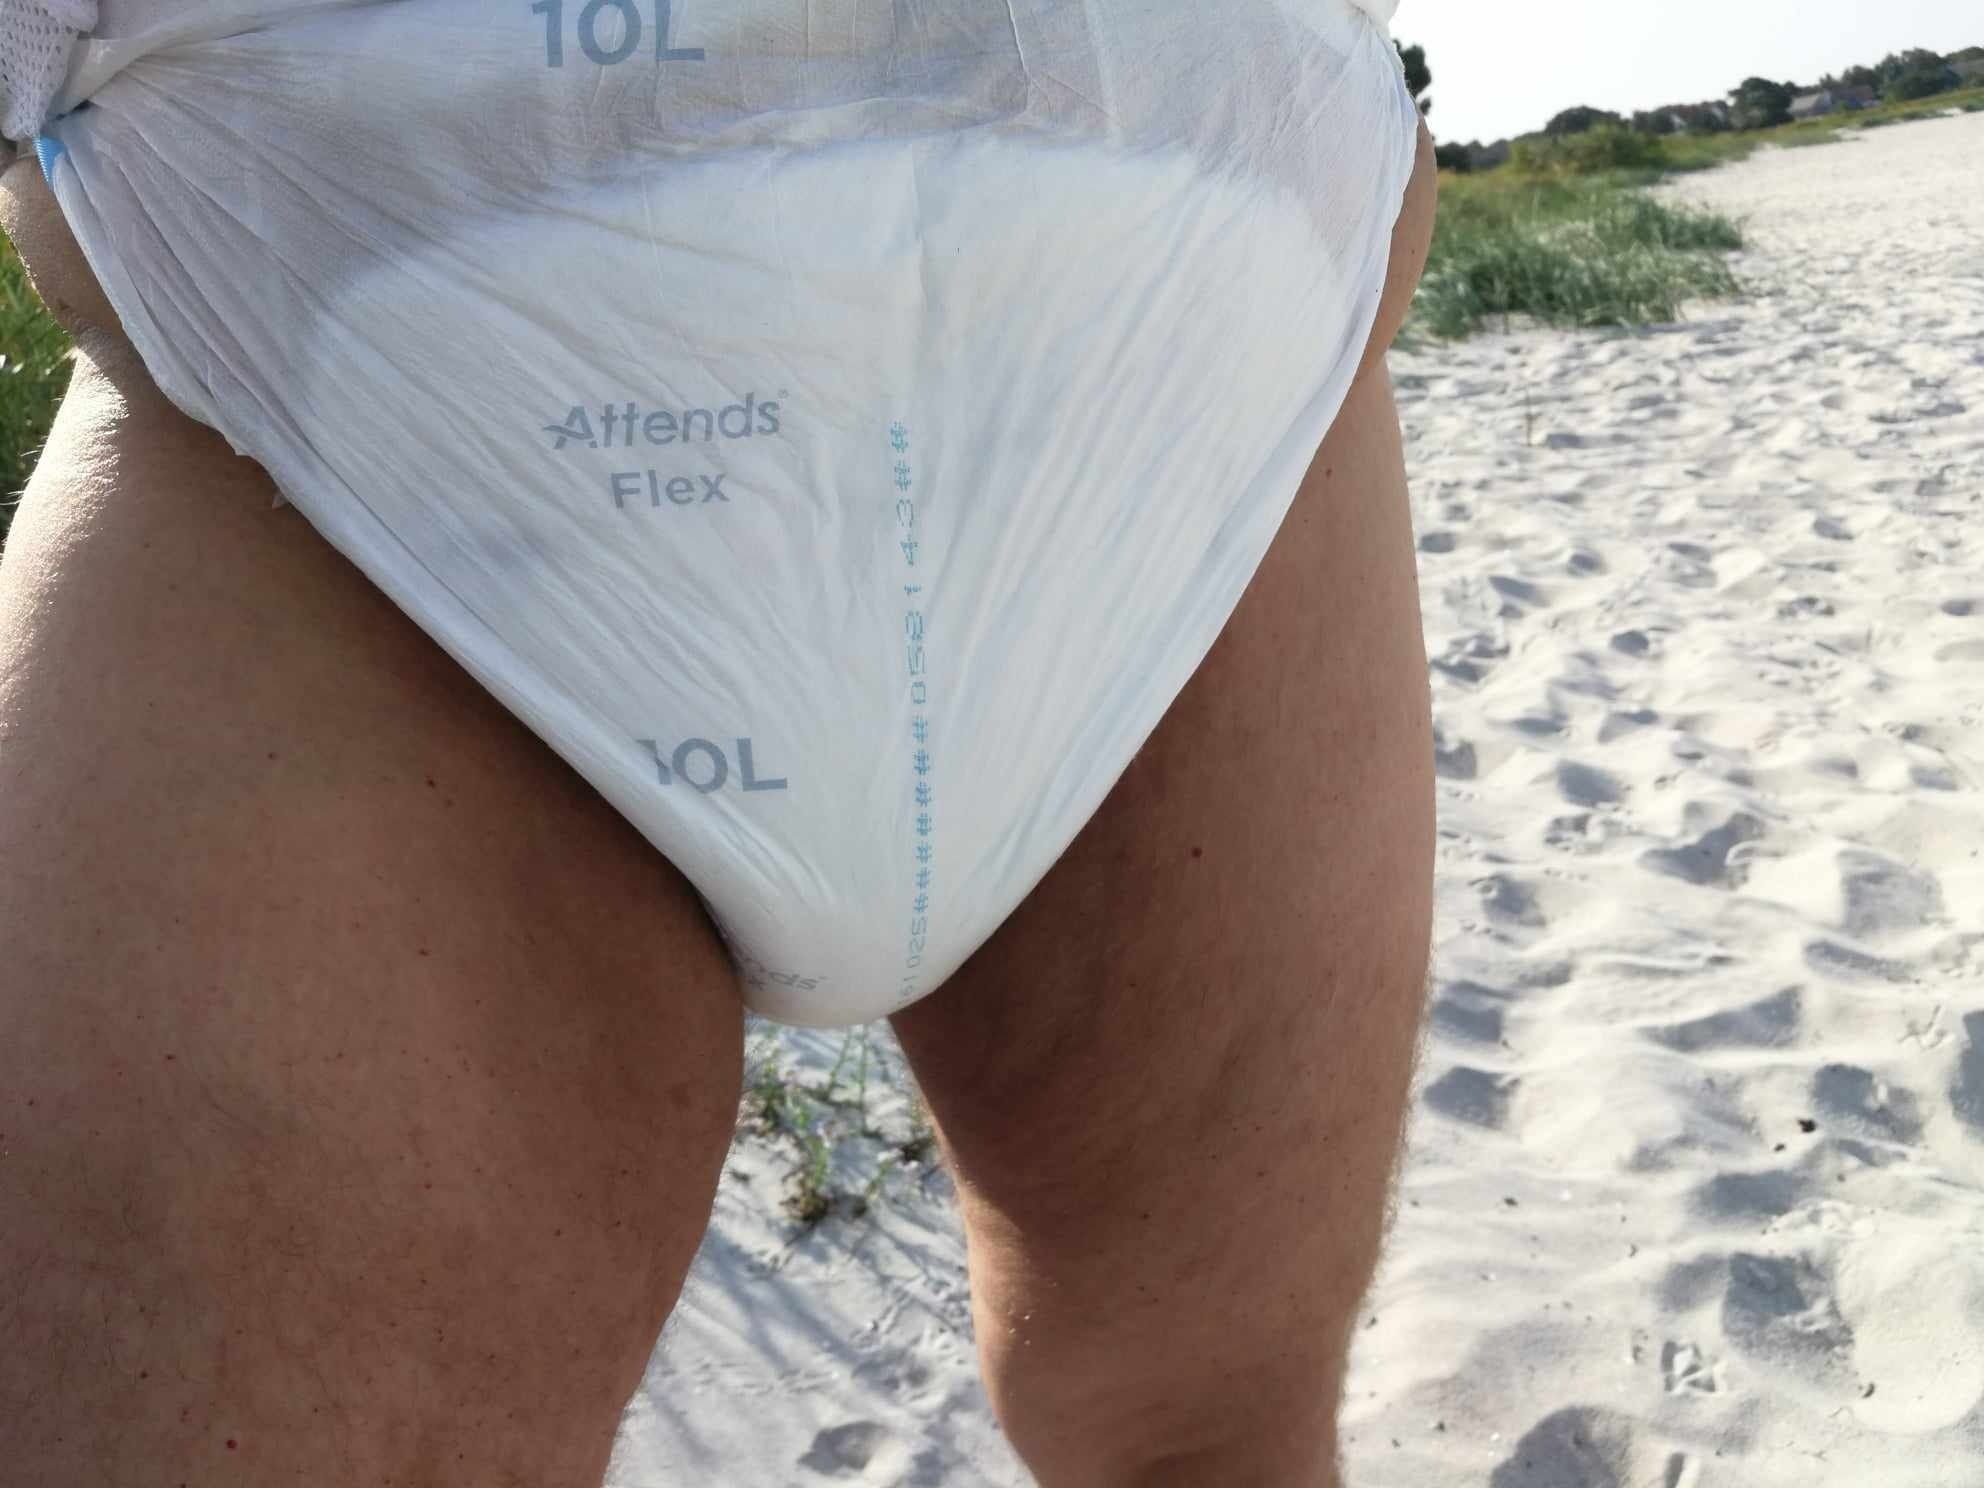 Diaper on public beach #12